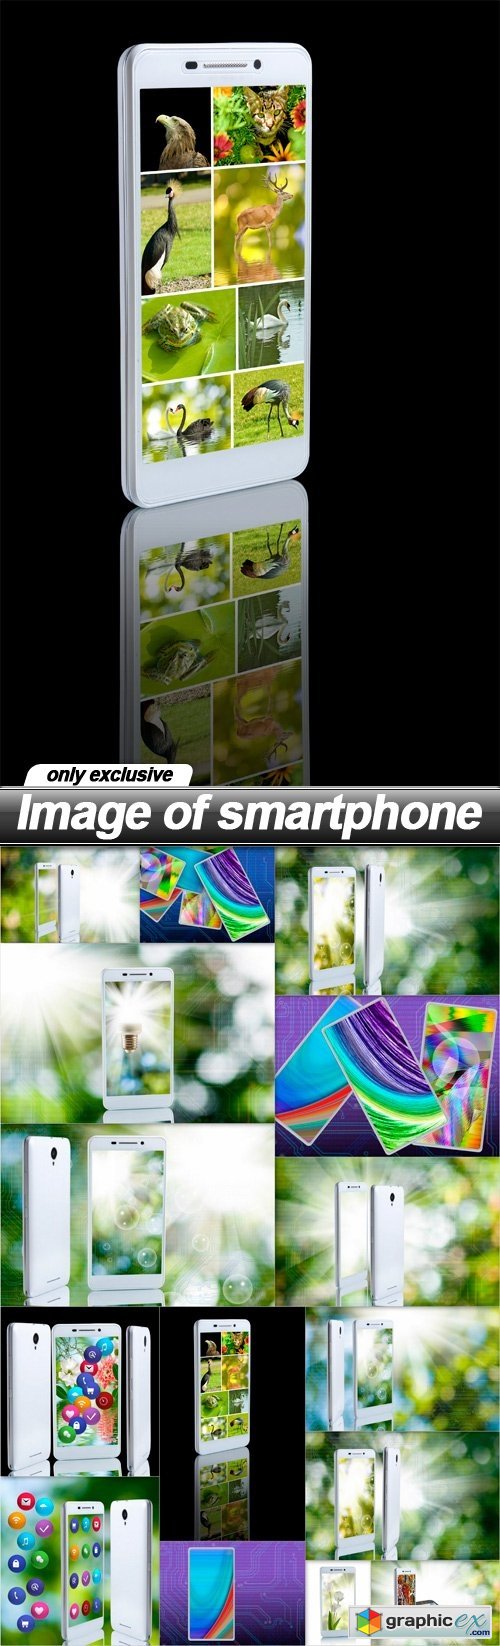 Image of smartphone - 15 UHQ JPEG